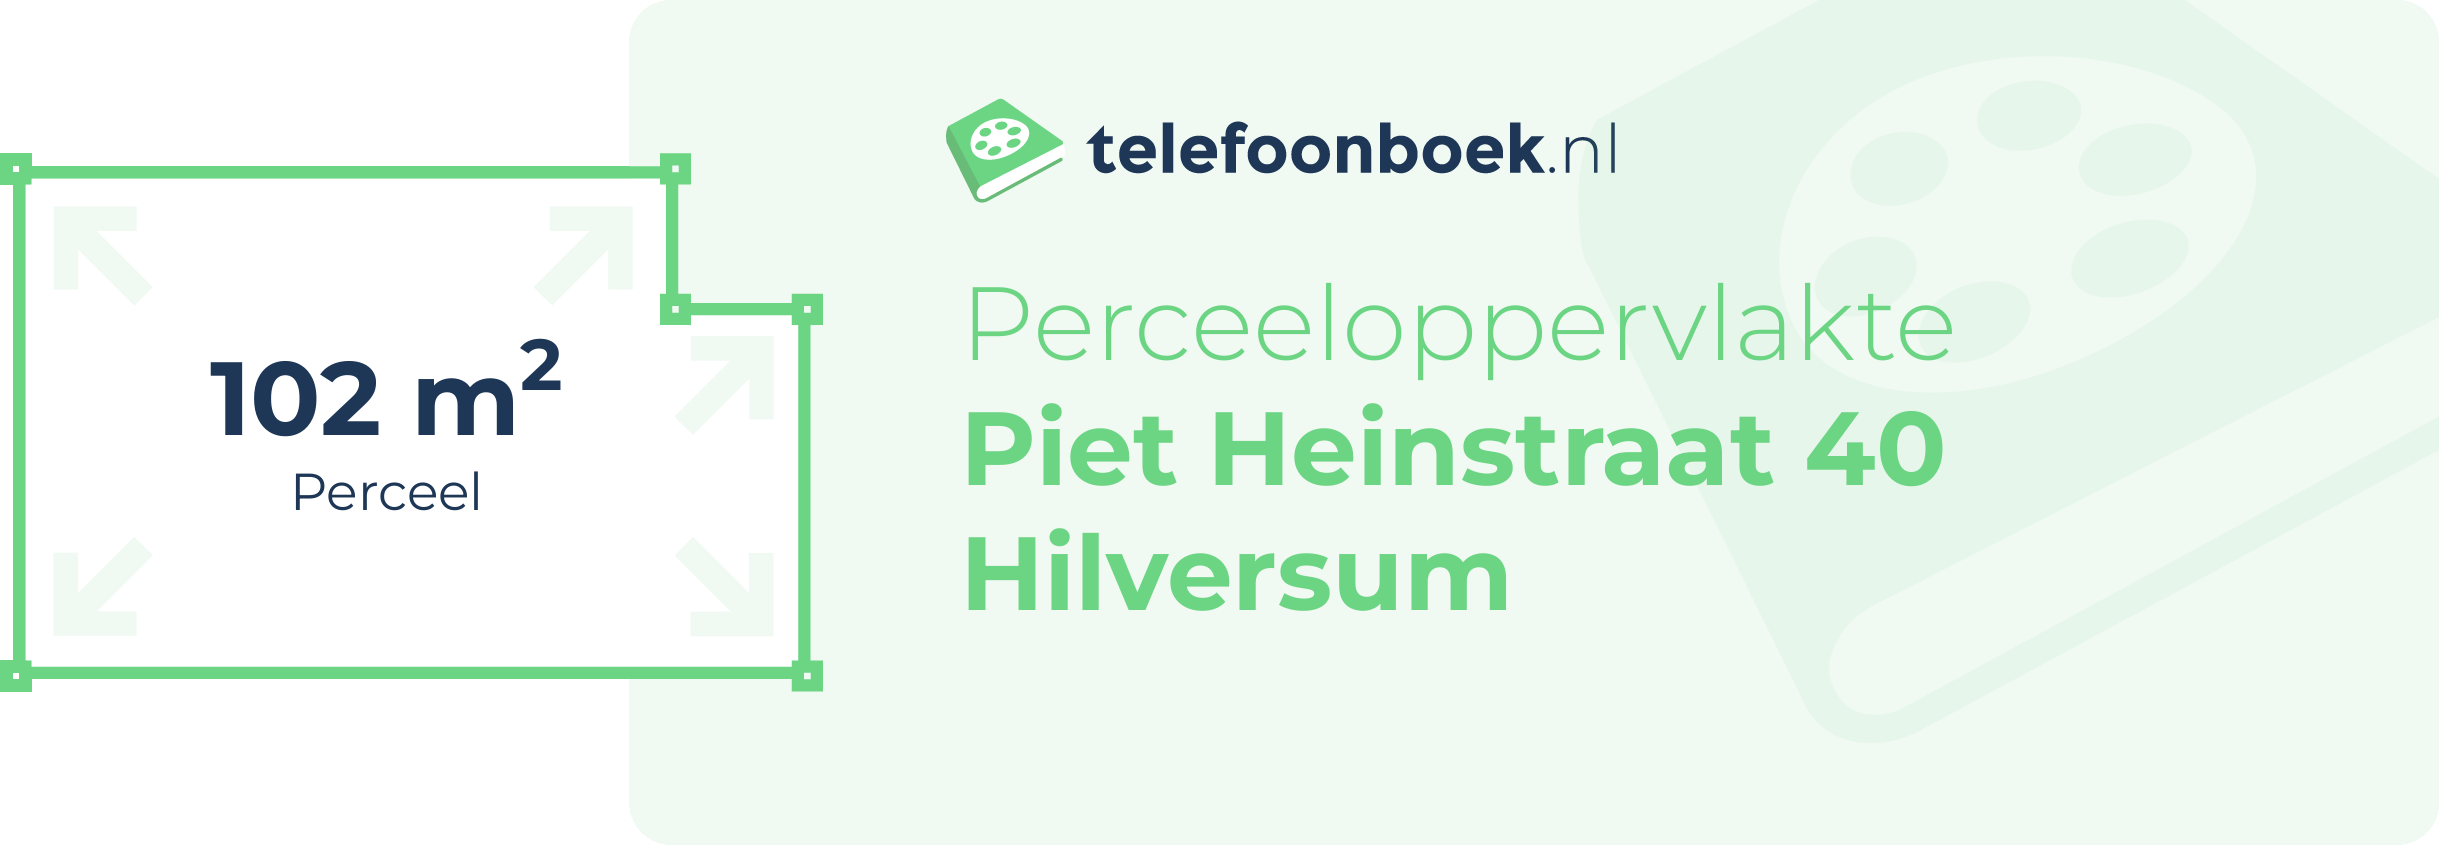 Perceeloppervlakte Piet Heinstraat 40 Hilversum